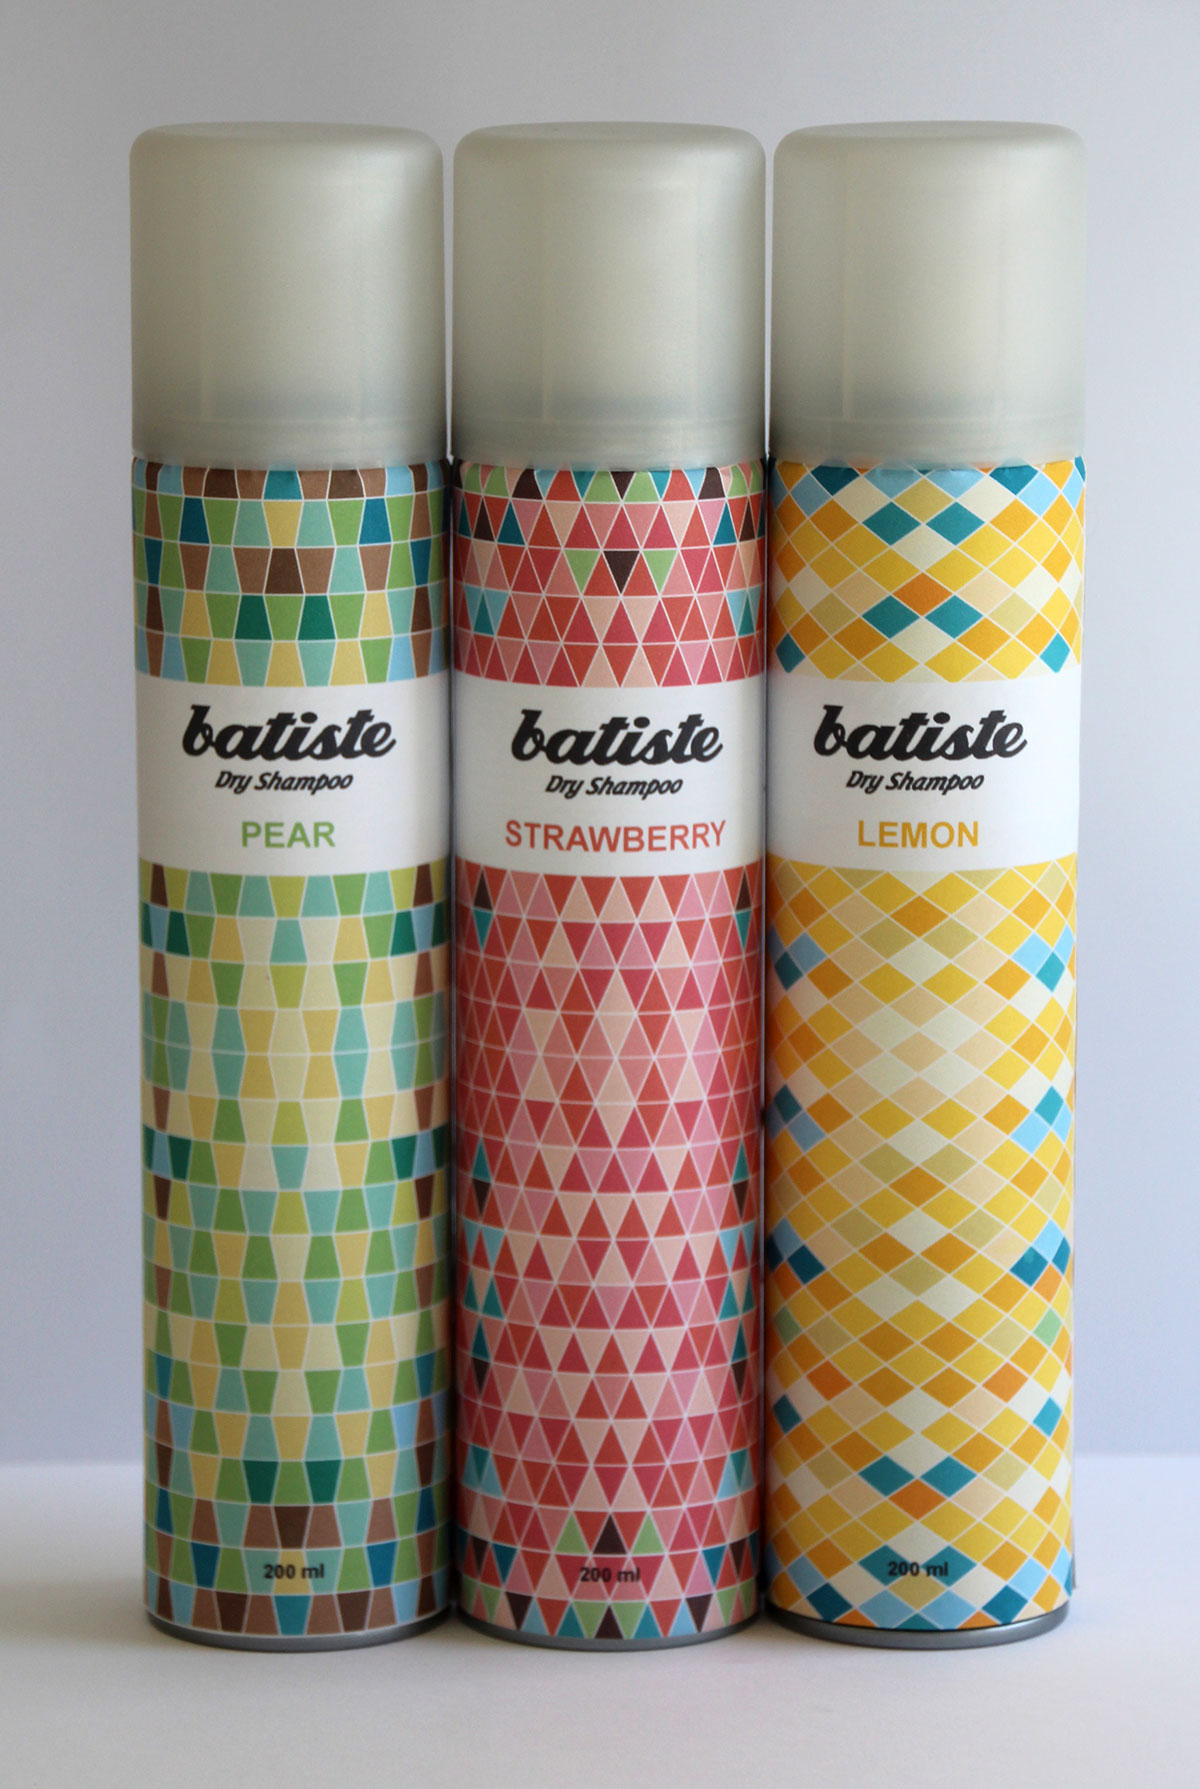 Batiste Batiste Dry Shampoo shampoo green Pear red strawberry yellow lemon Fruit pattern neo geo Triangles geometry